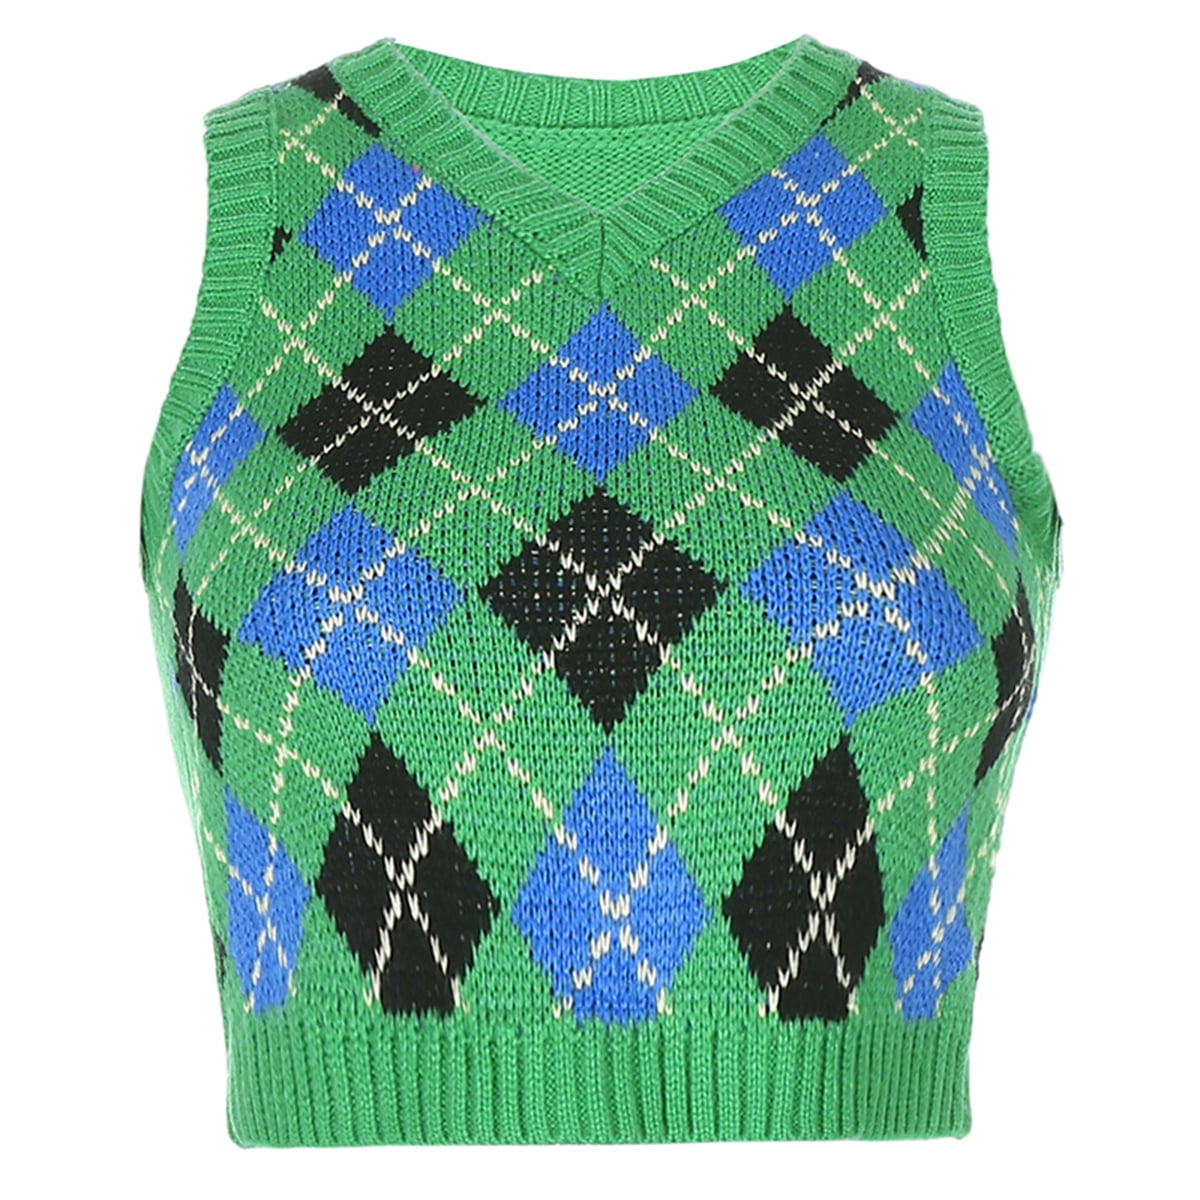 Multitrust Woman's Woolen Sweater Vest Retro Knitted Bare Midriff ...